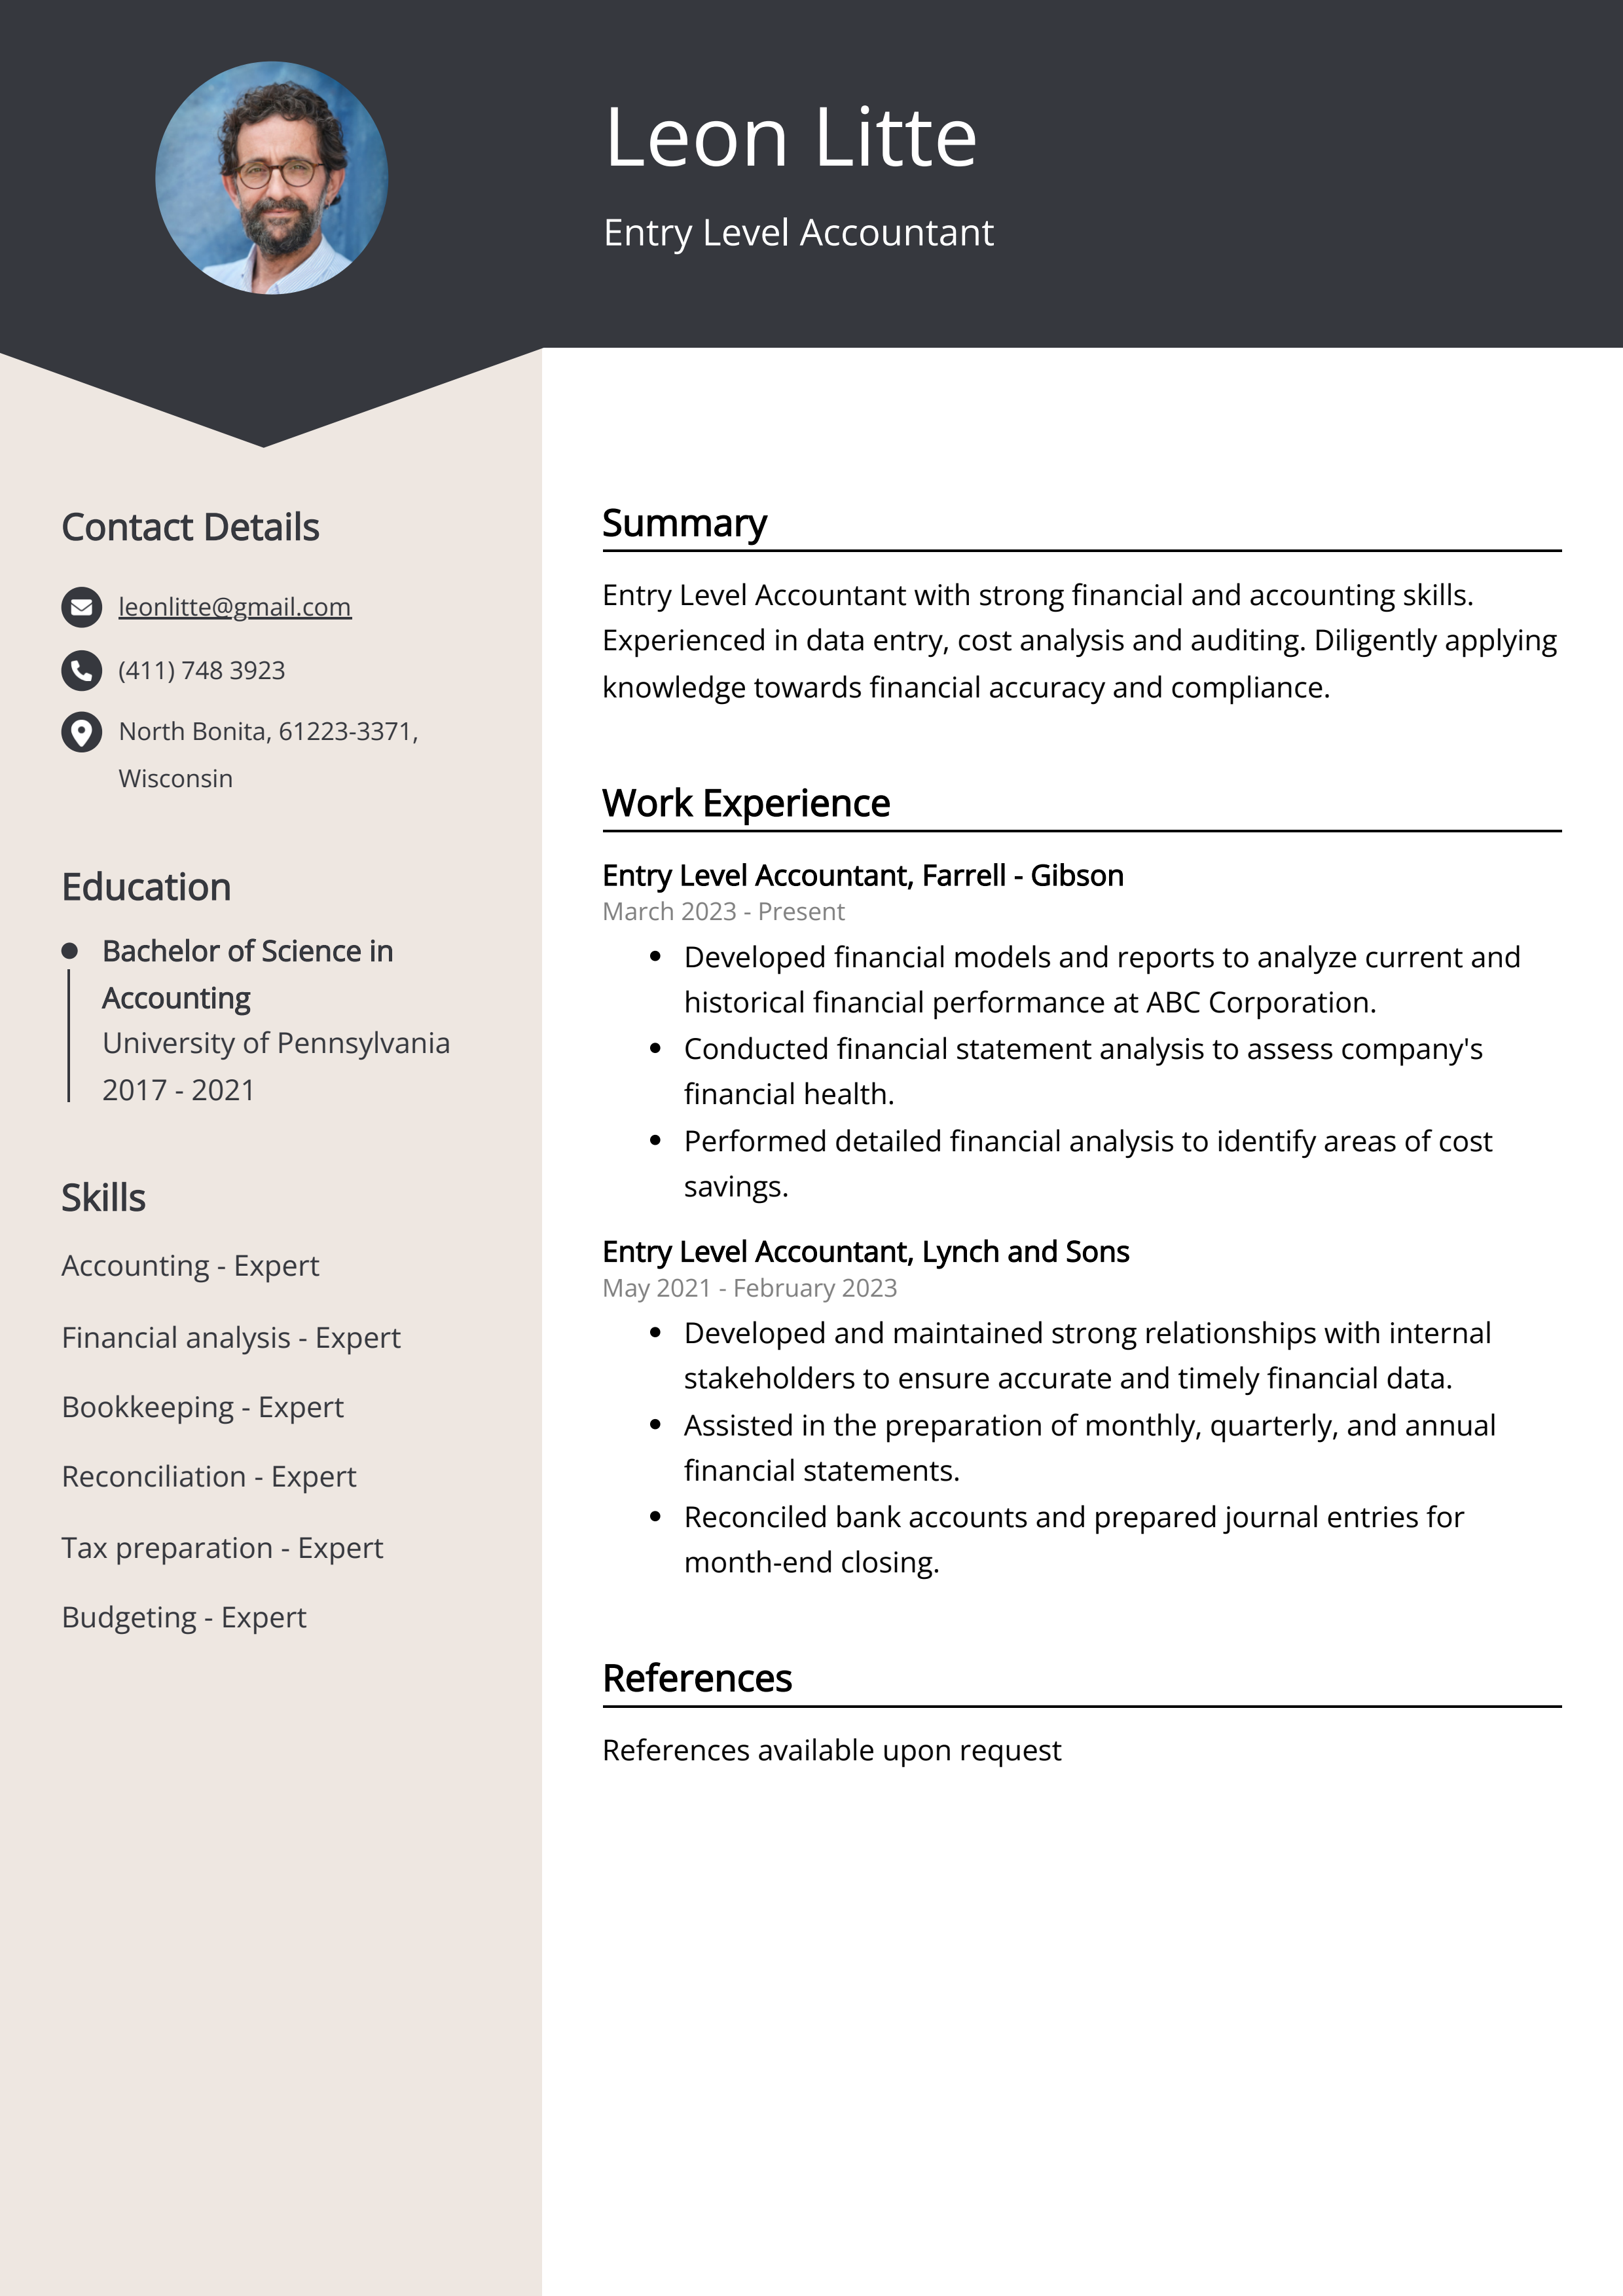 Entry Level Accountant CV Example